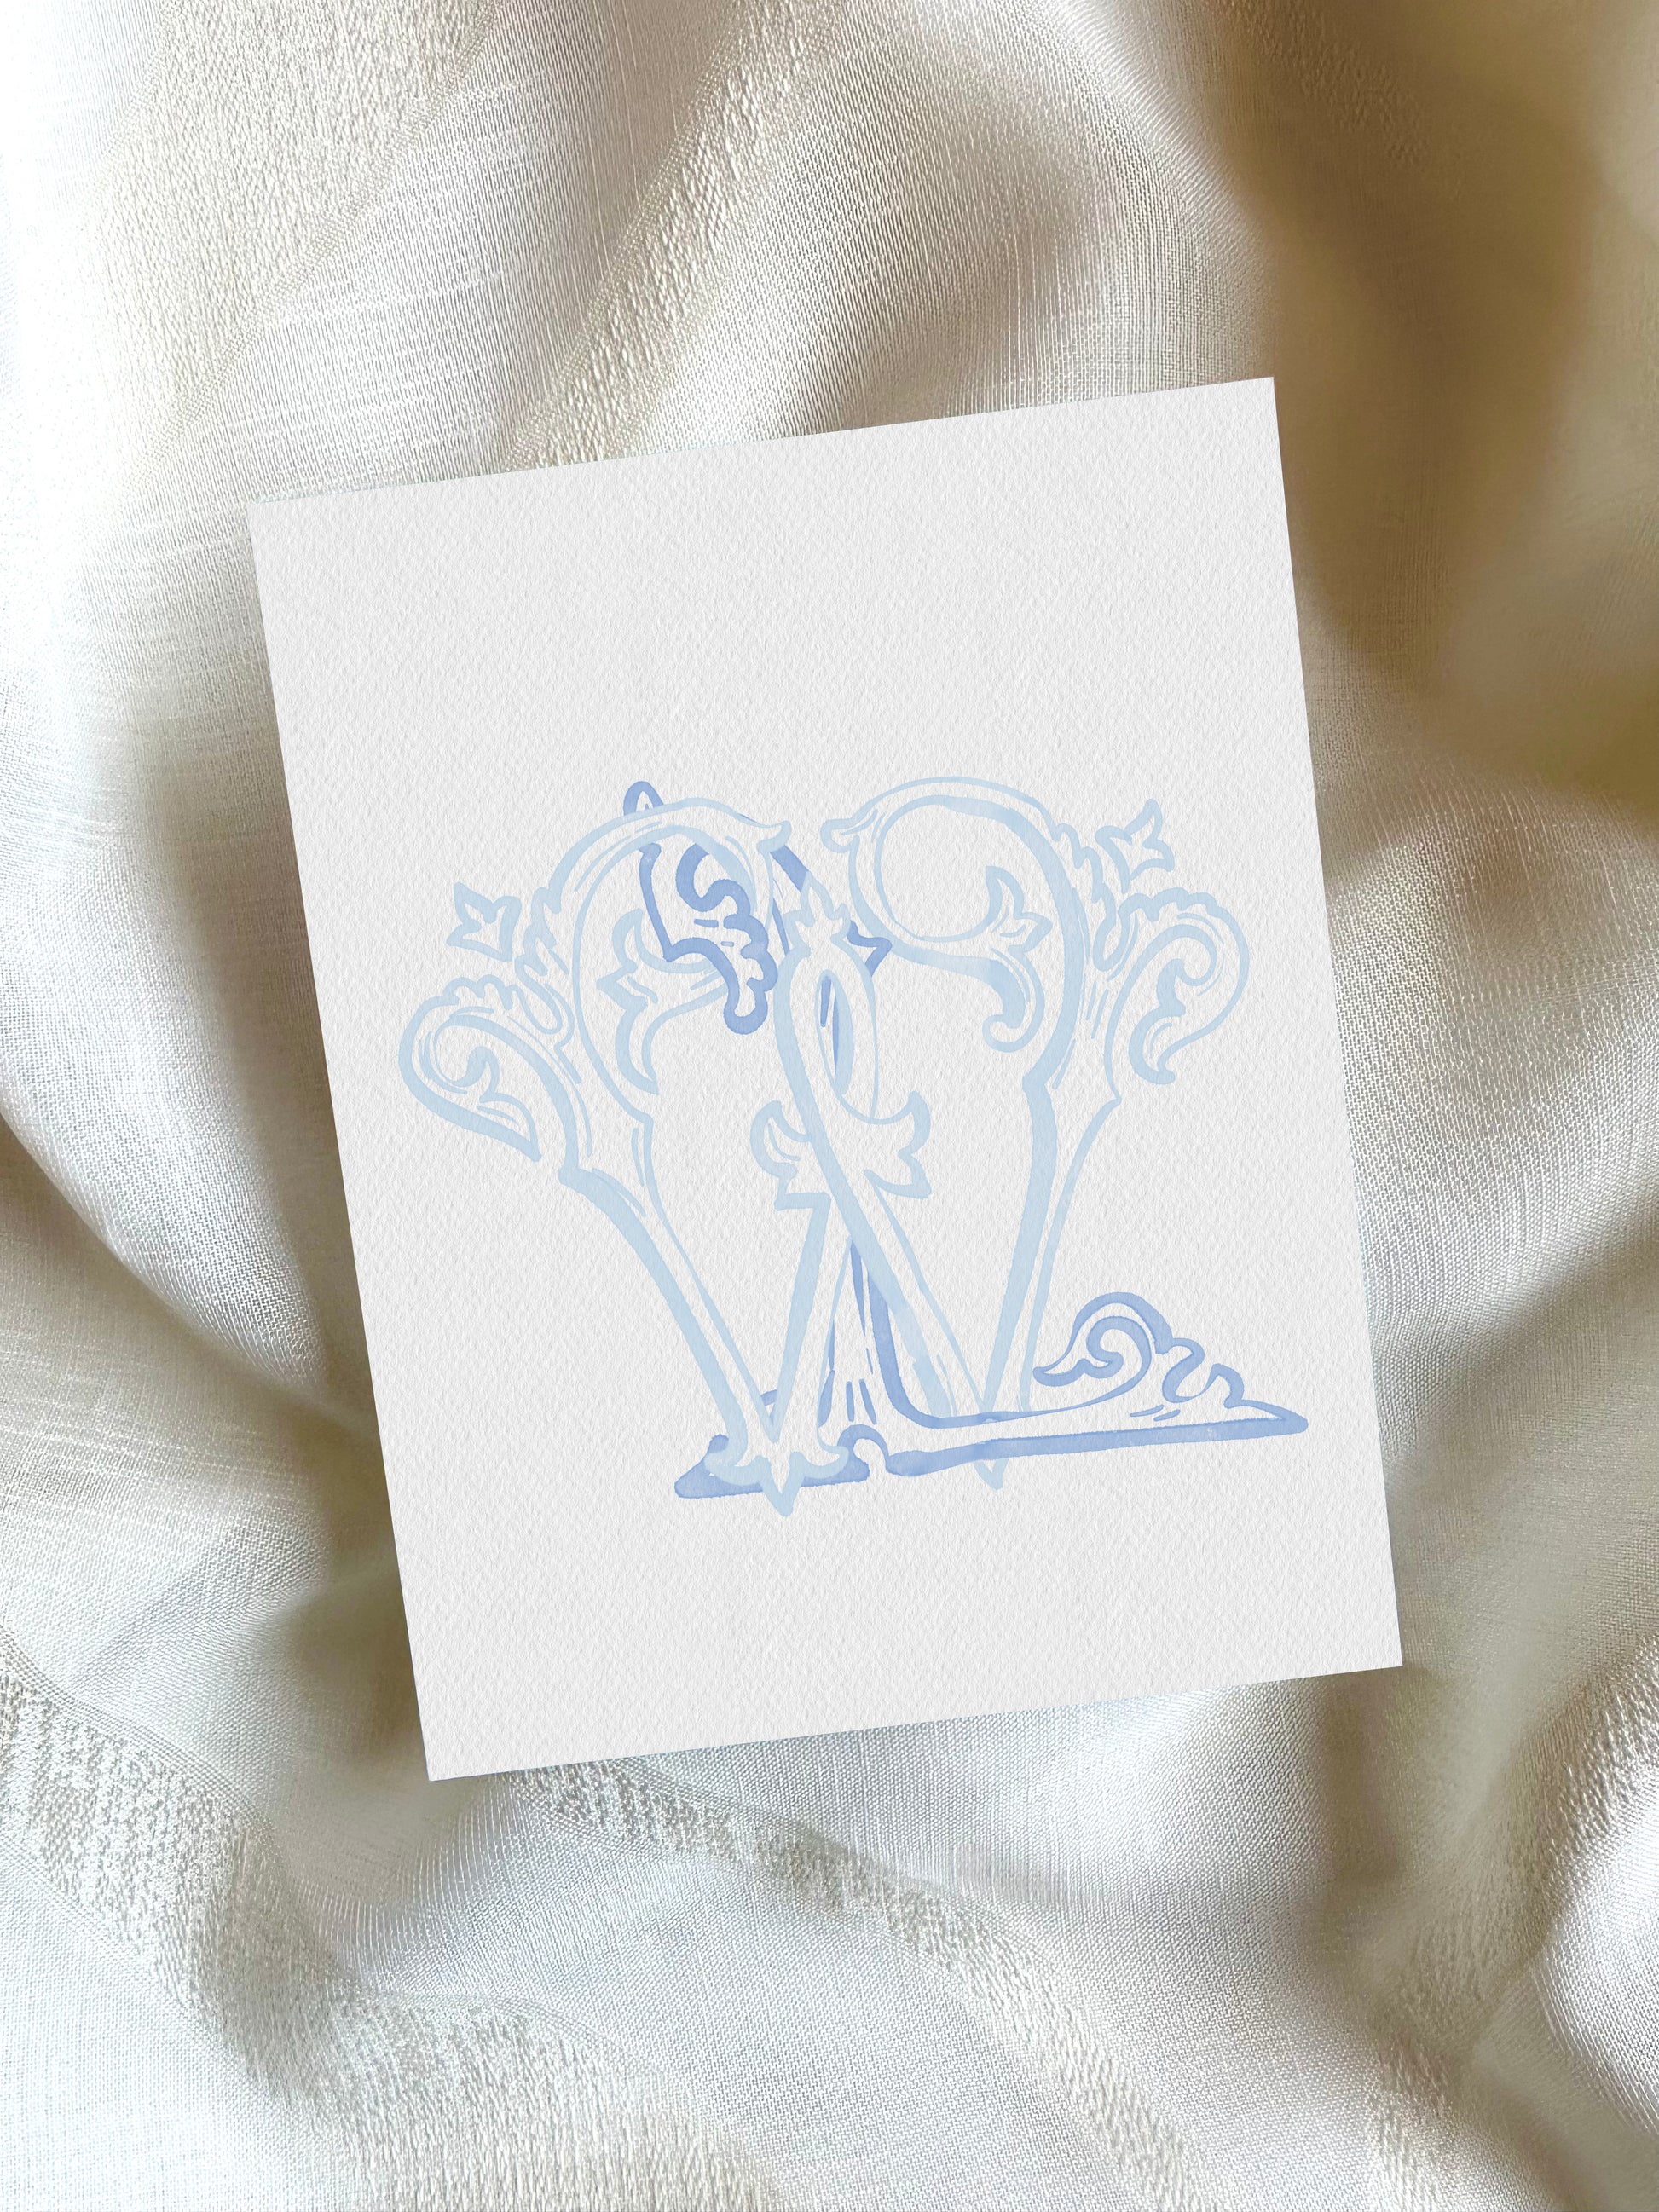 2 Letter Monogram with Letters LW WL | Digital Download - Wedding Monogram SVG, Personal Logo, Wedding Logo for Wedding Invitations The Wedding Crest Lab